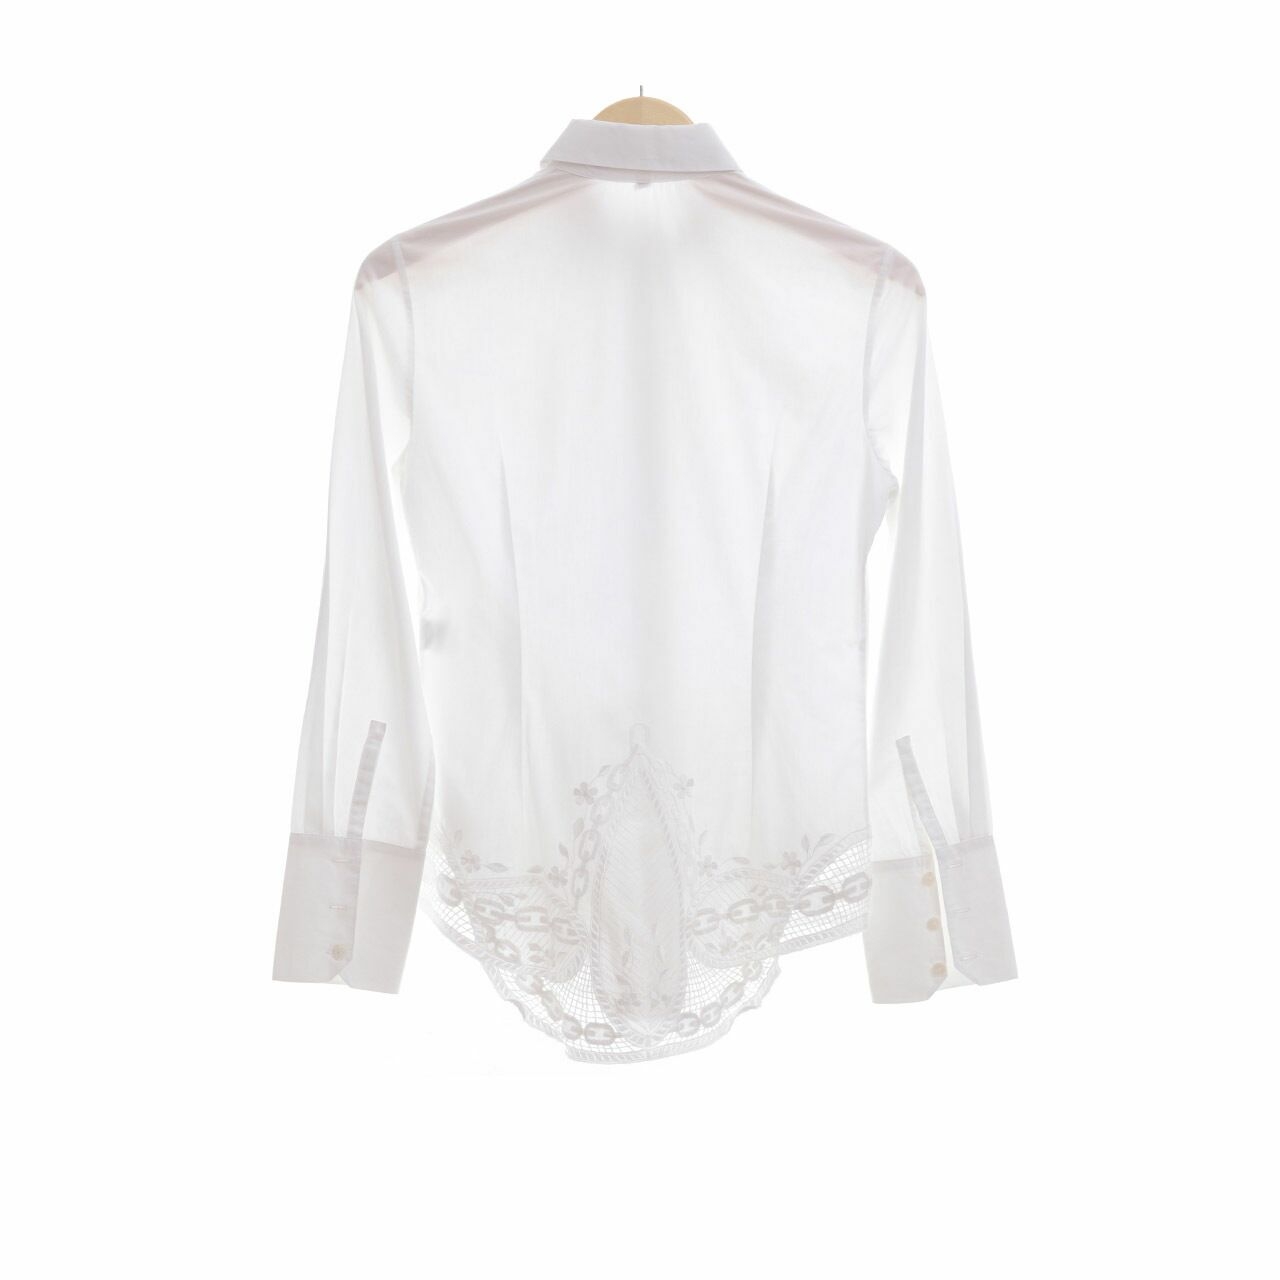 Toton White Lace Shirt